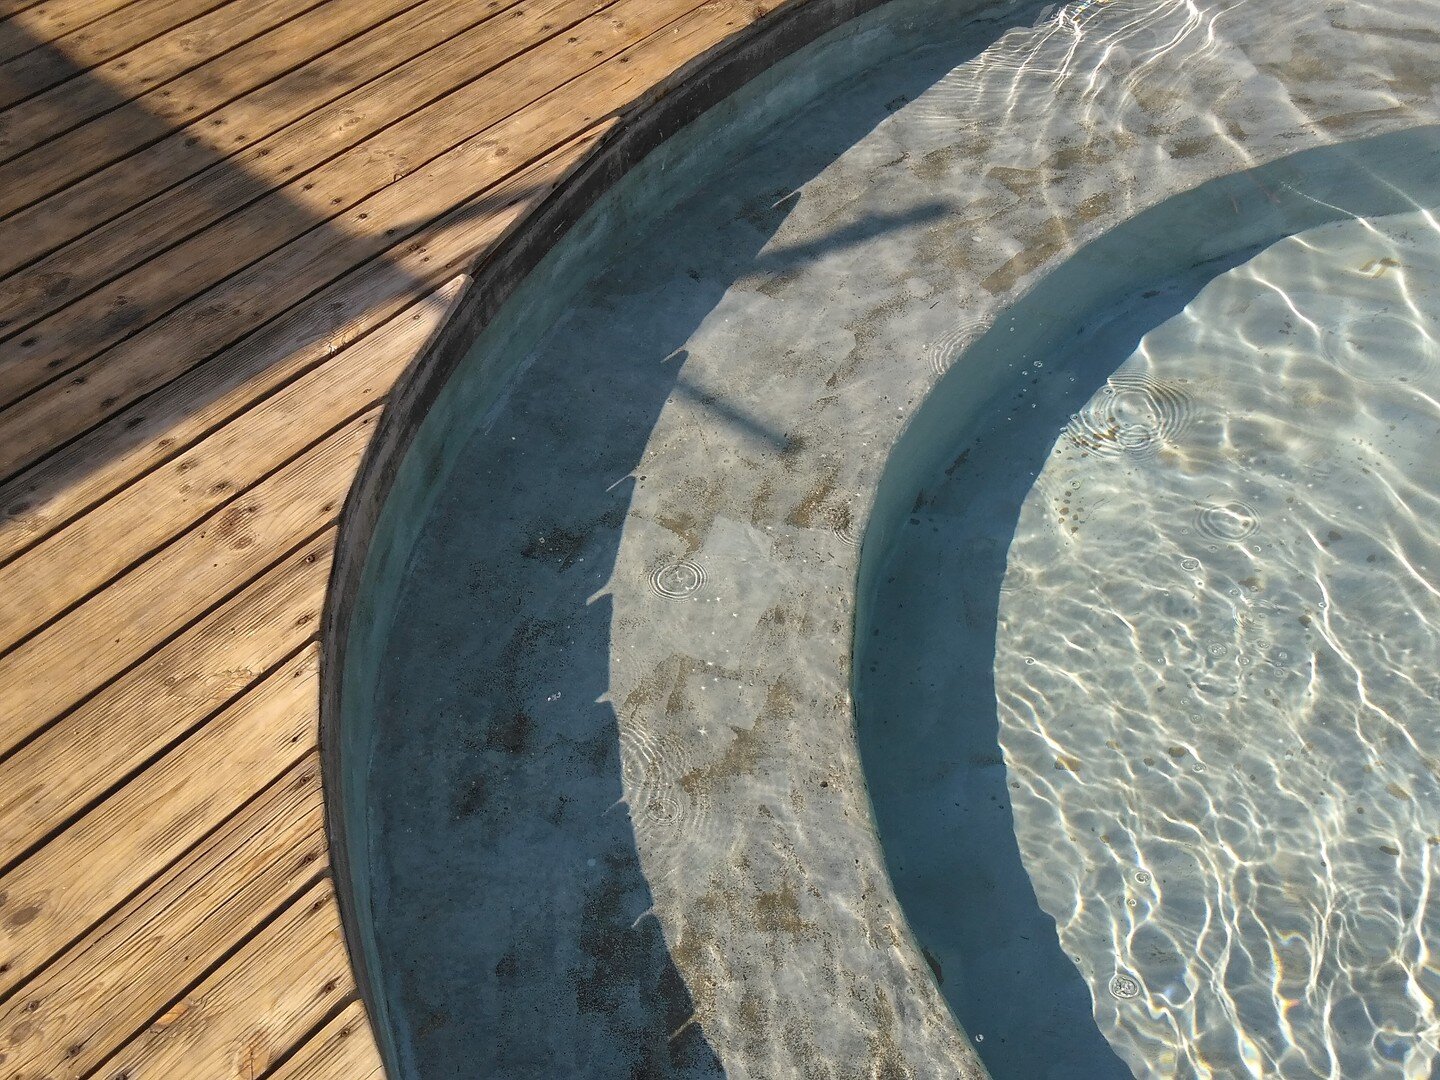 wet pool bar lounge 
#pooldesign #concretepool